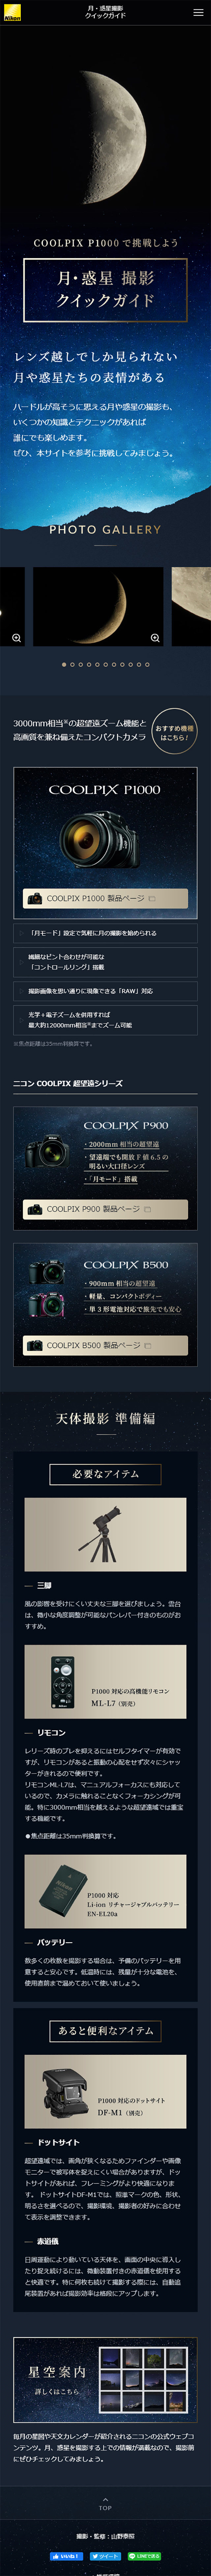 COOLPIX P1000 月・惑星撮影クイックガイド_sp_1